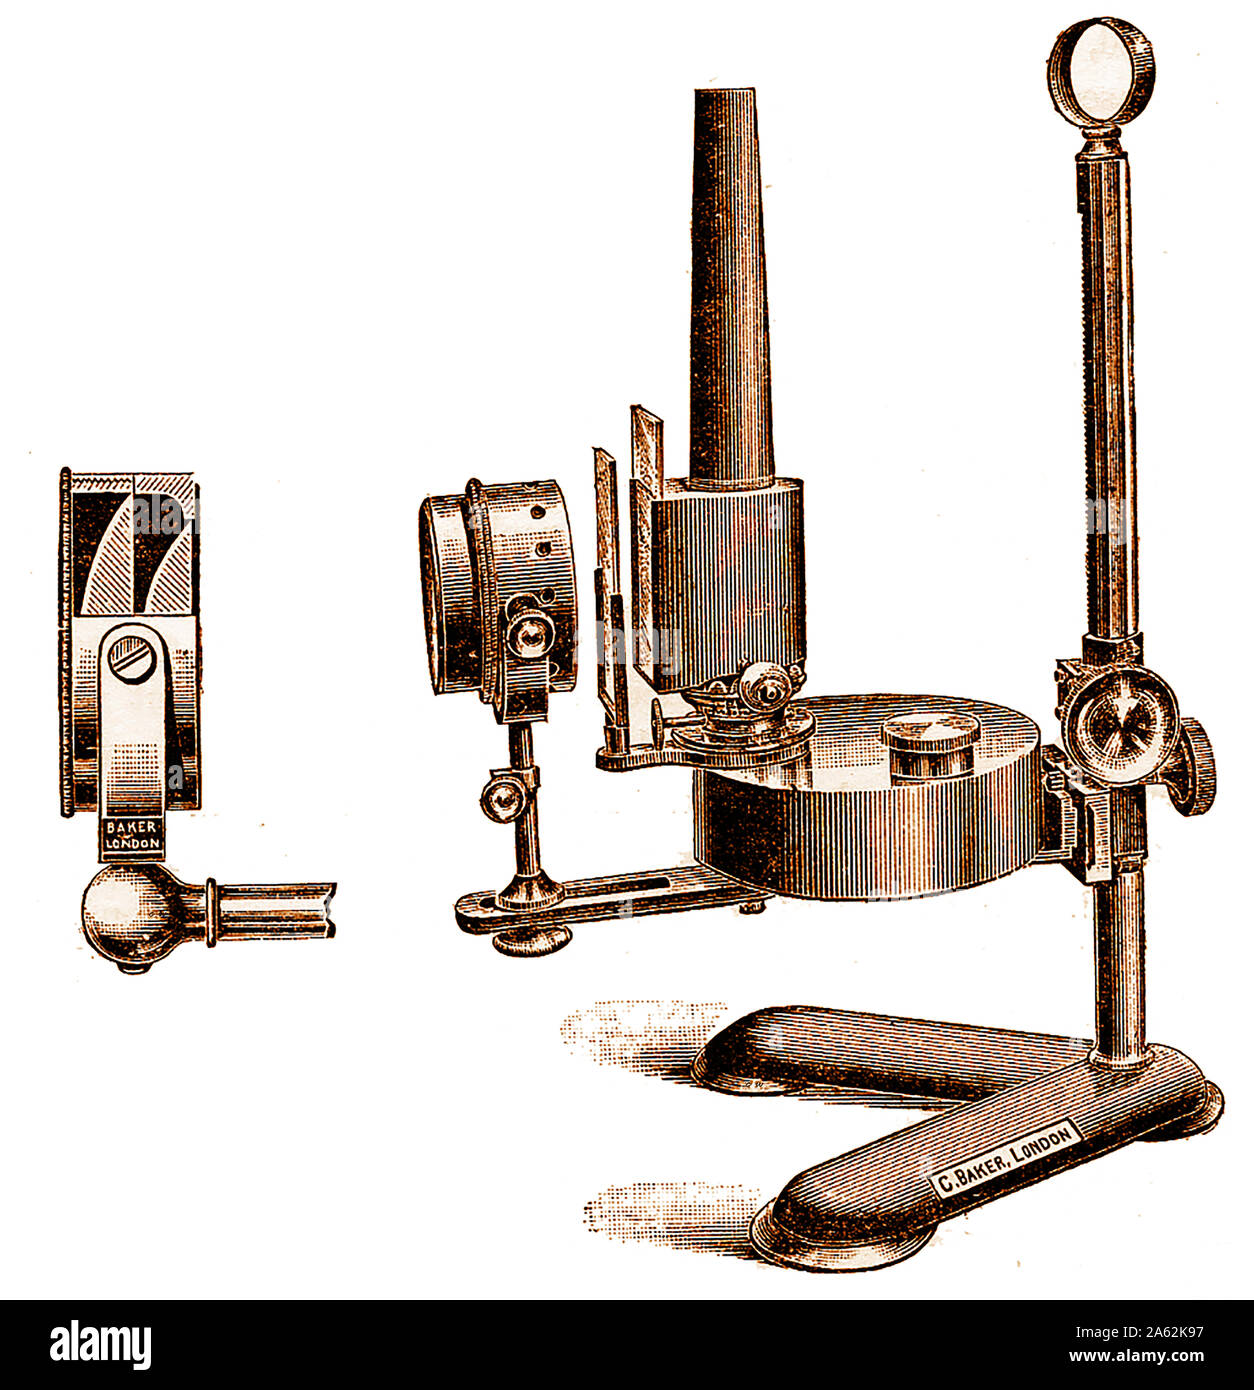 Early microscope laboratory equipment - Baker's Microscope Lamp with Bulls Eye Lens. Stock Photo